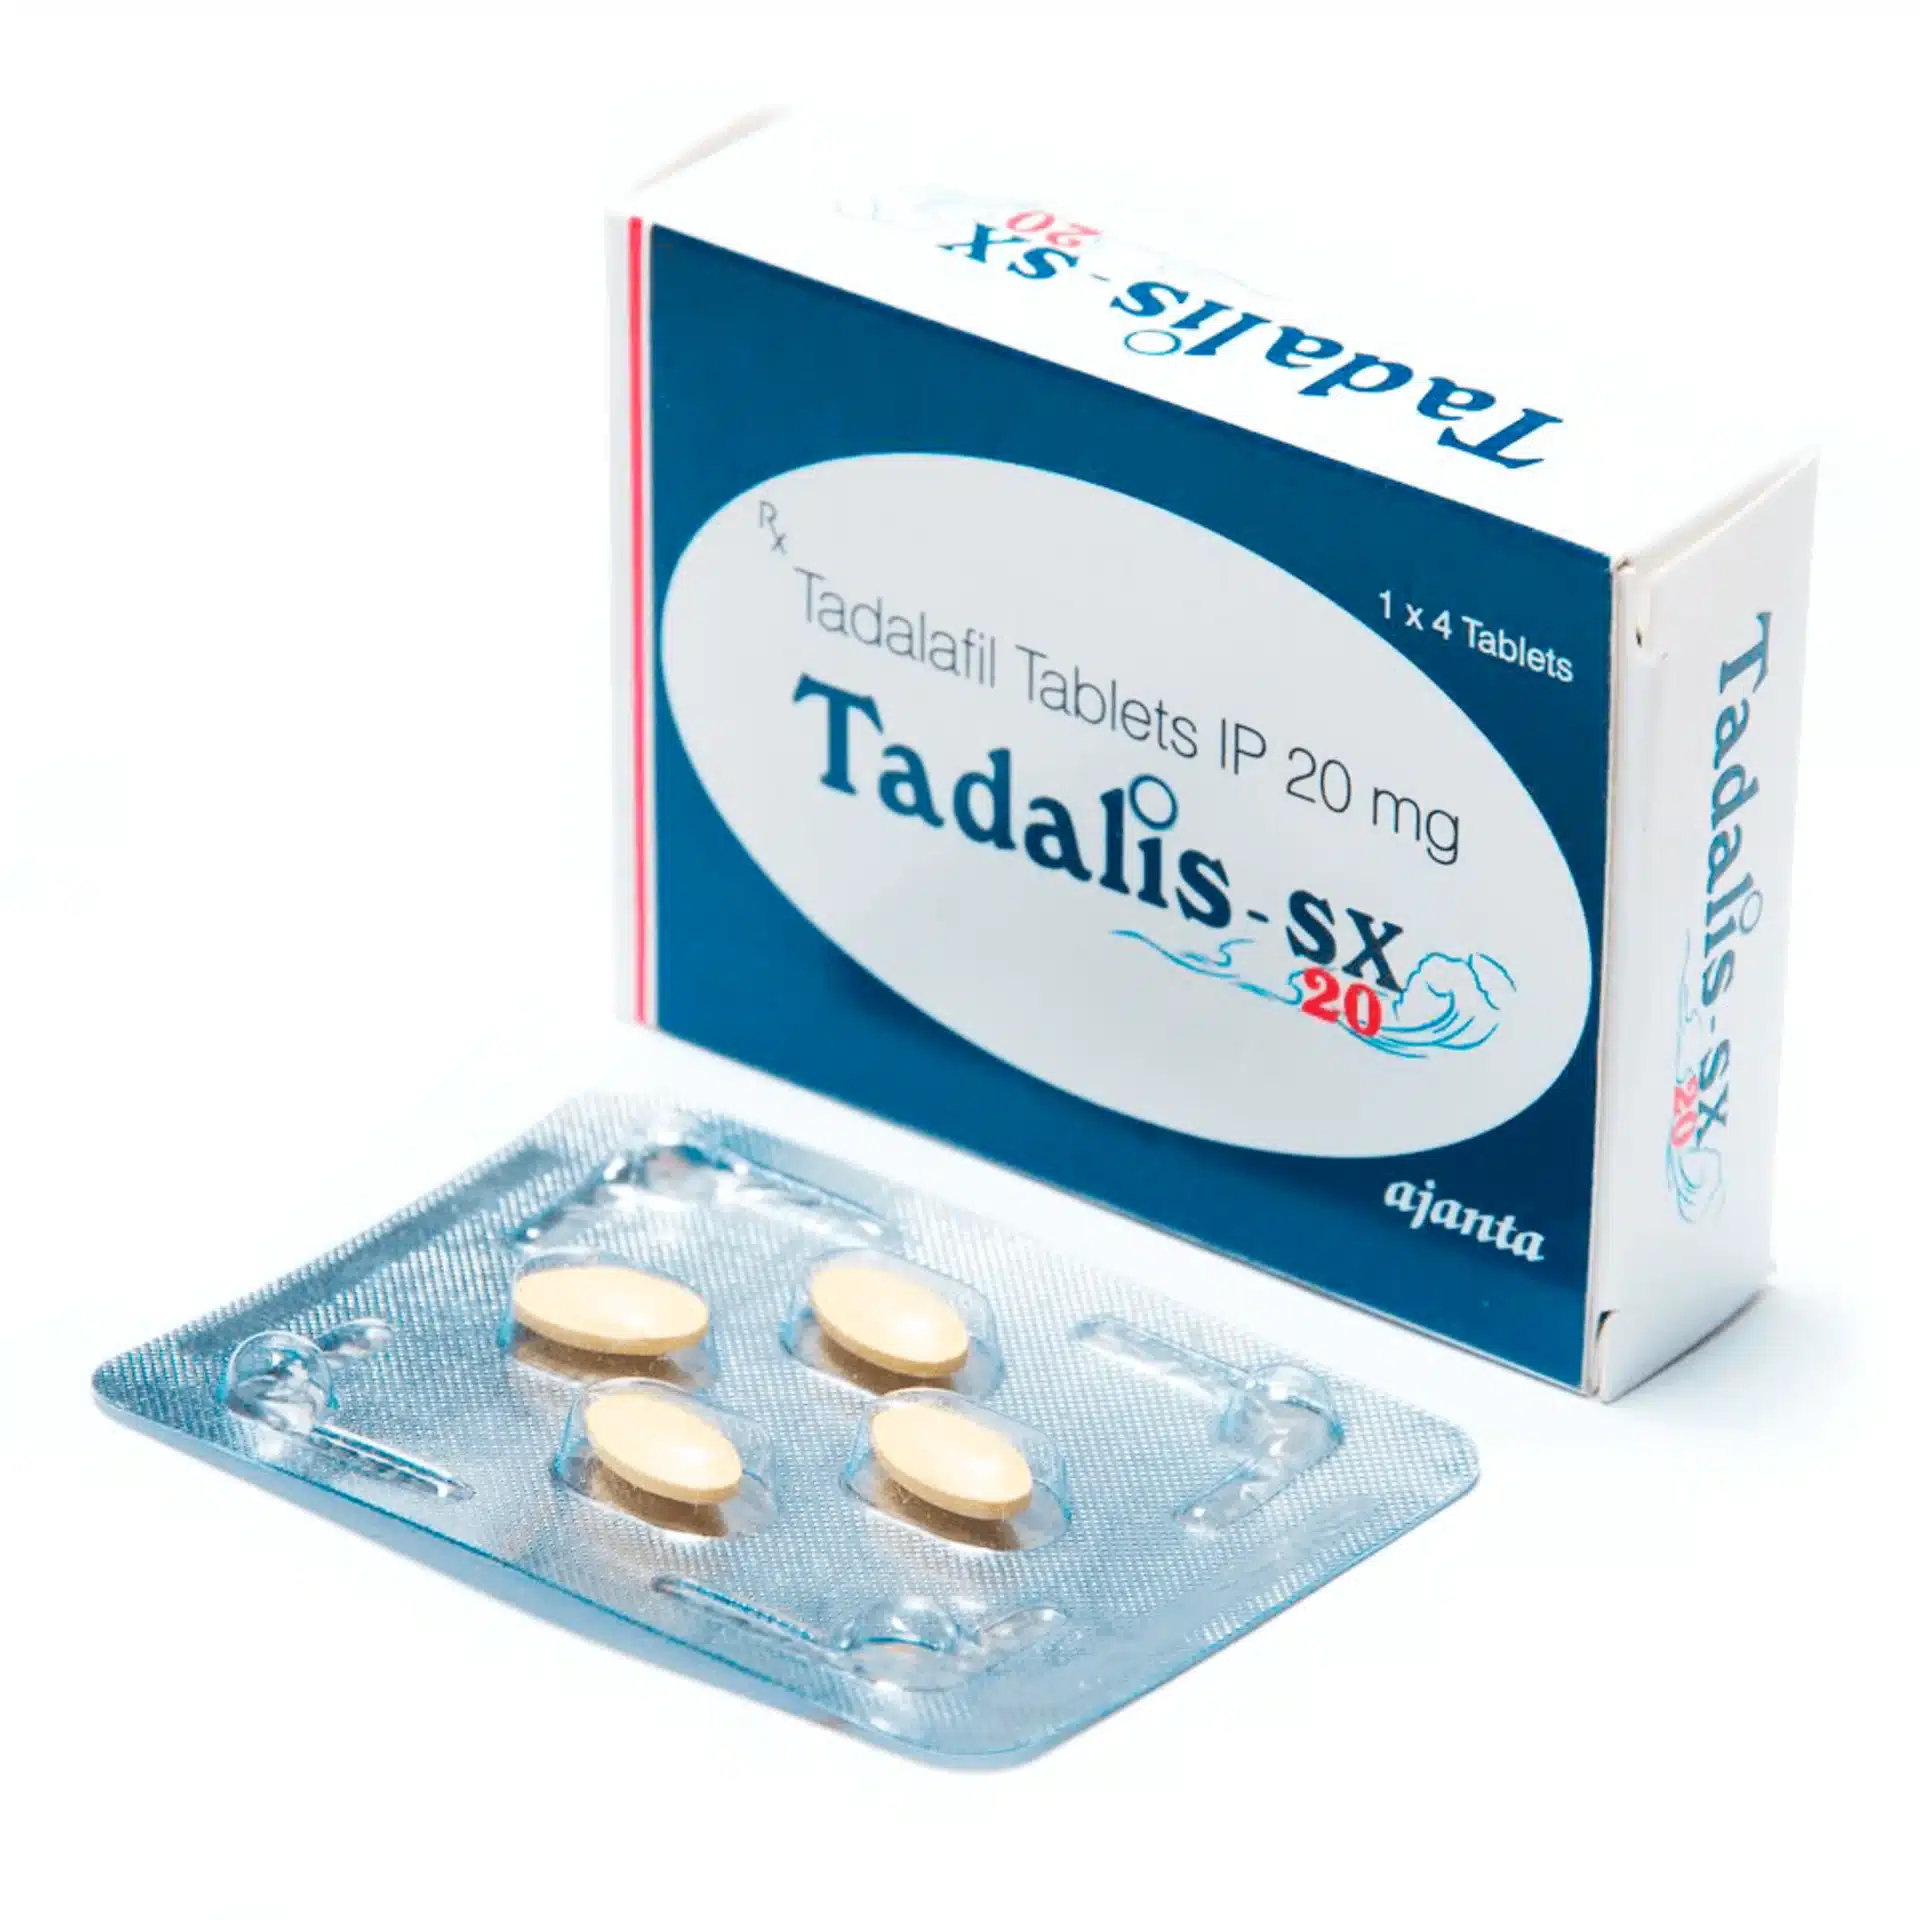 Tadalis Tablets In UAE